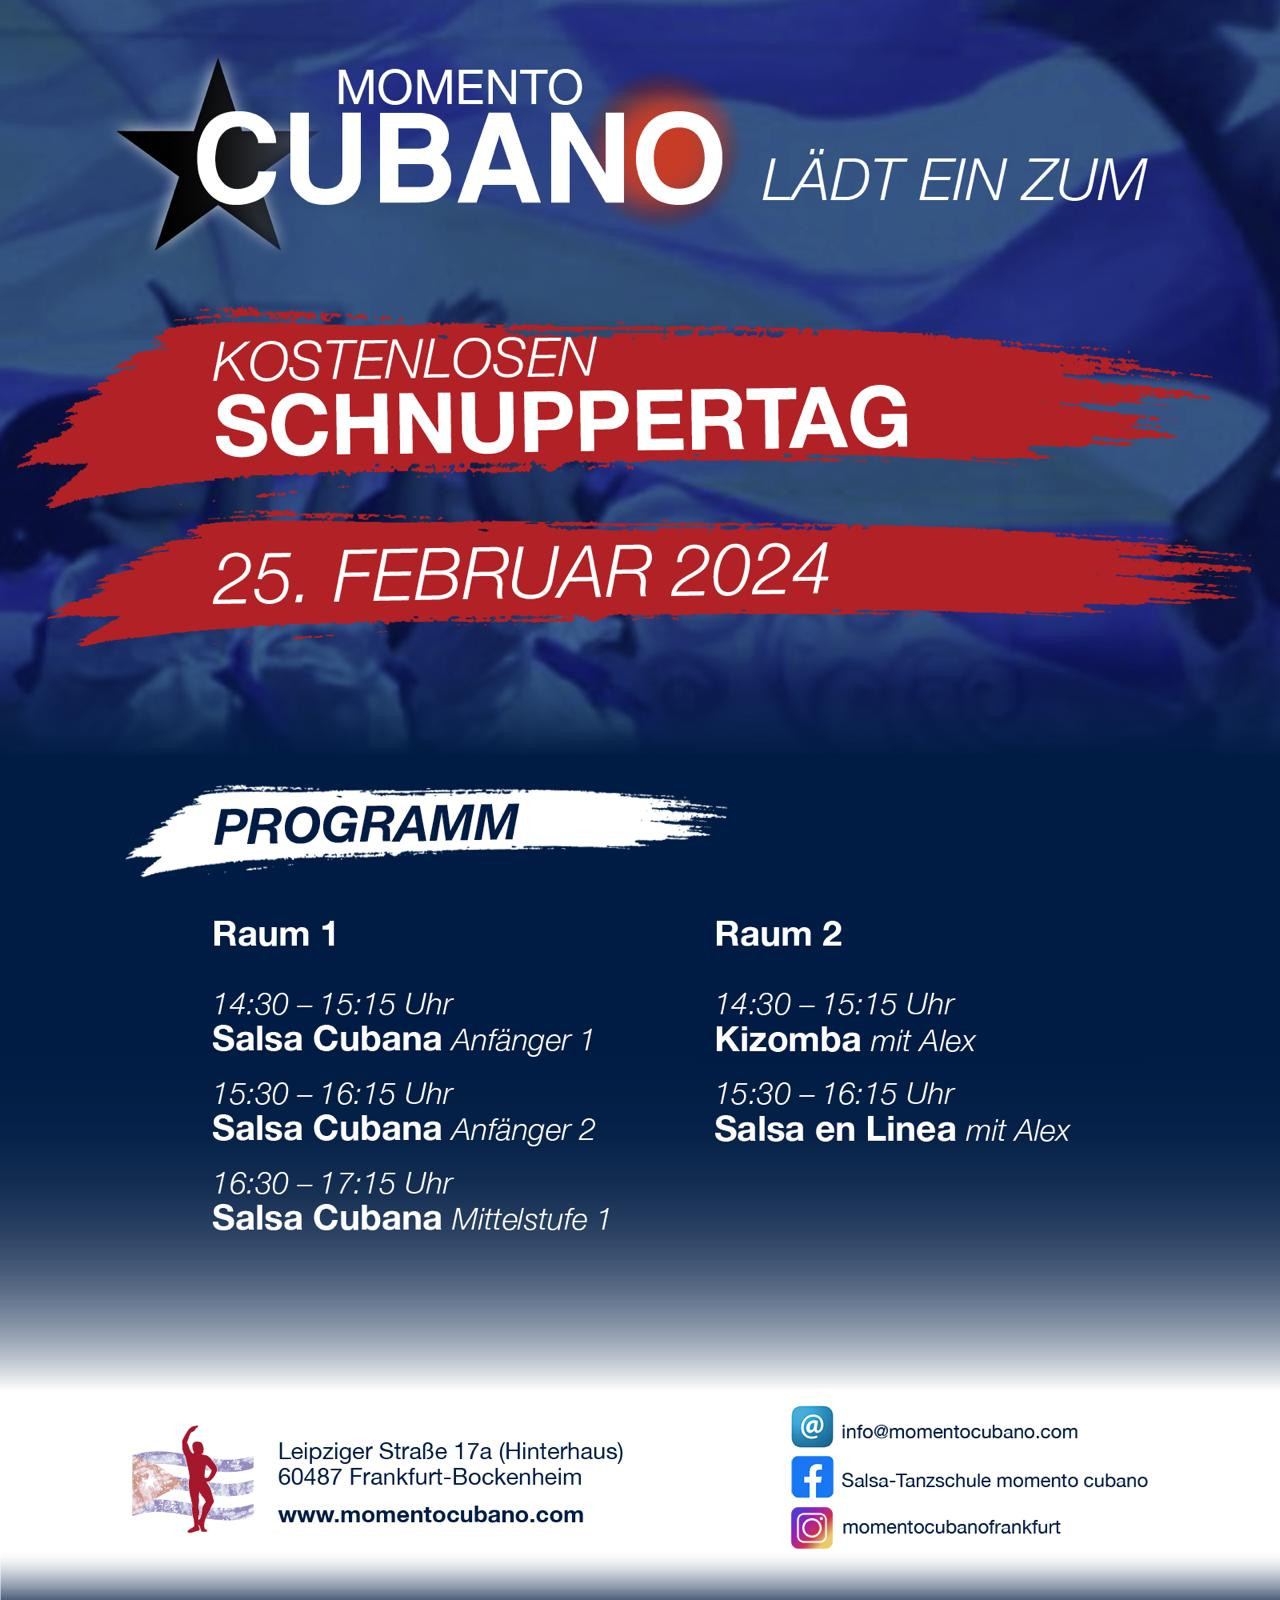 Don't miss it! Schnuppertage bei momento cubano am Sonntag, 25. Februar !